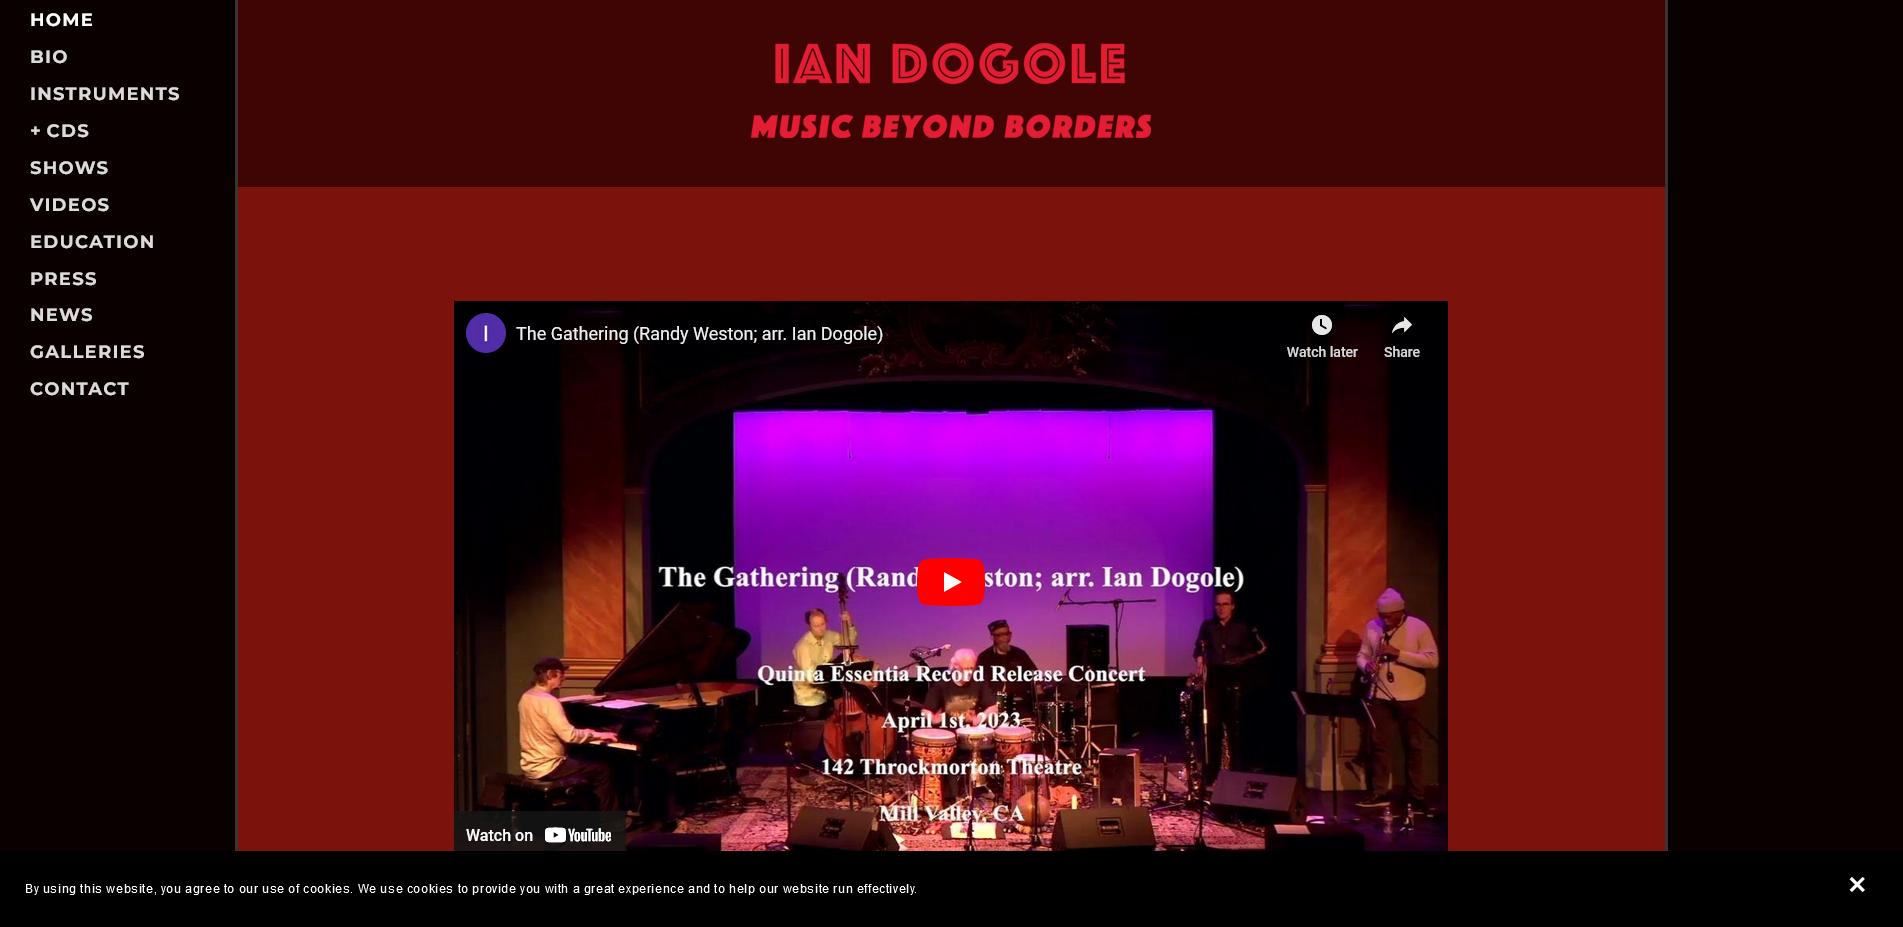 Ian Dogole – Music Beyond Borders